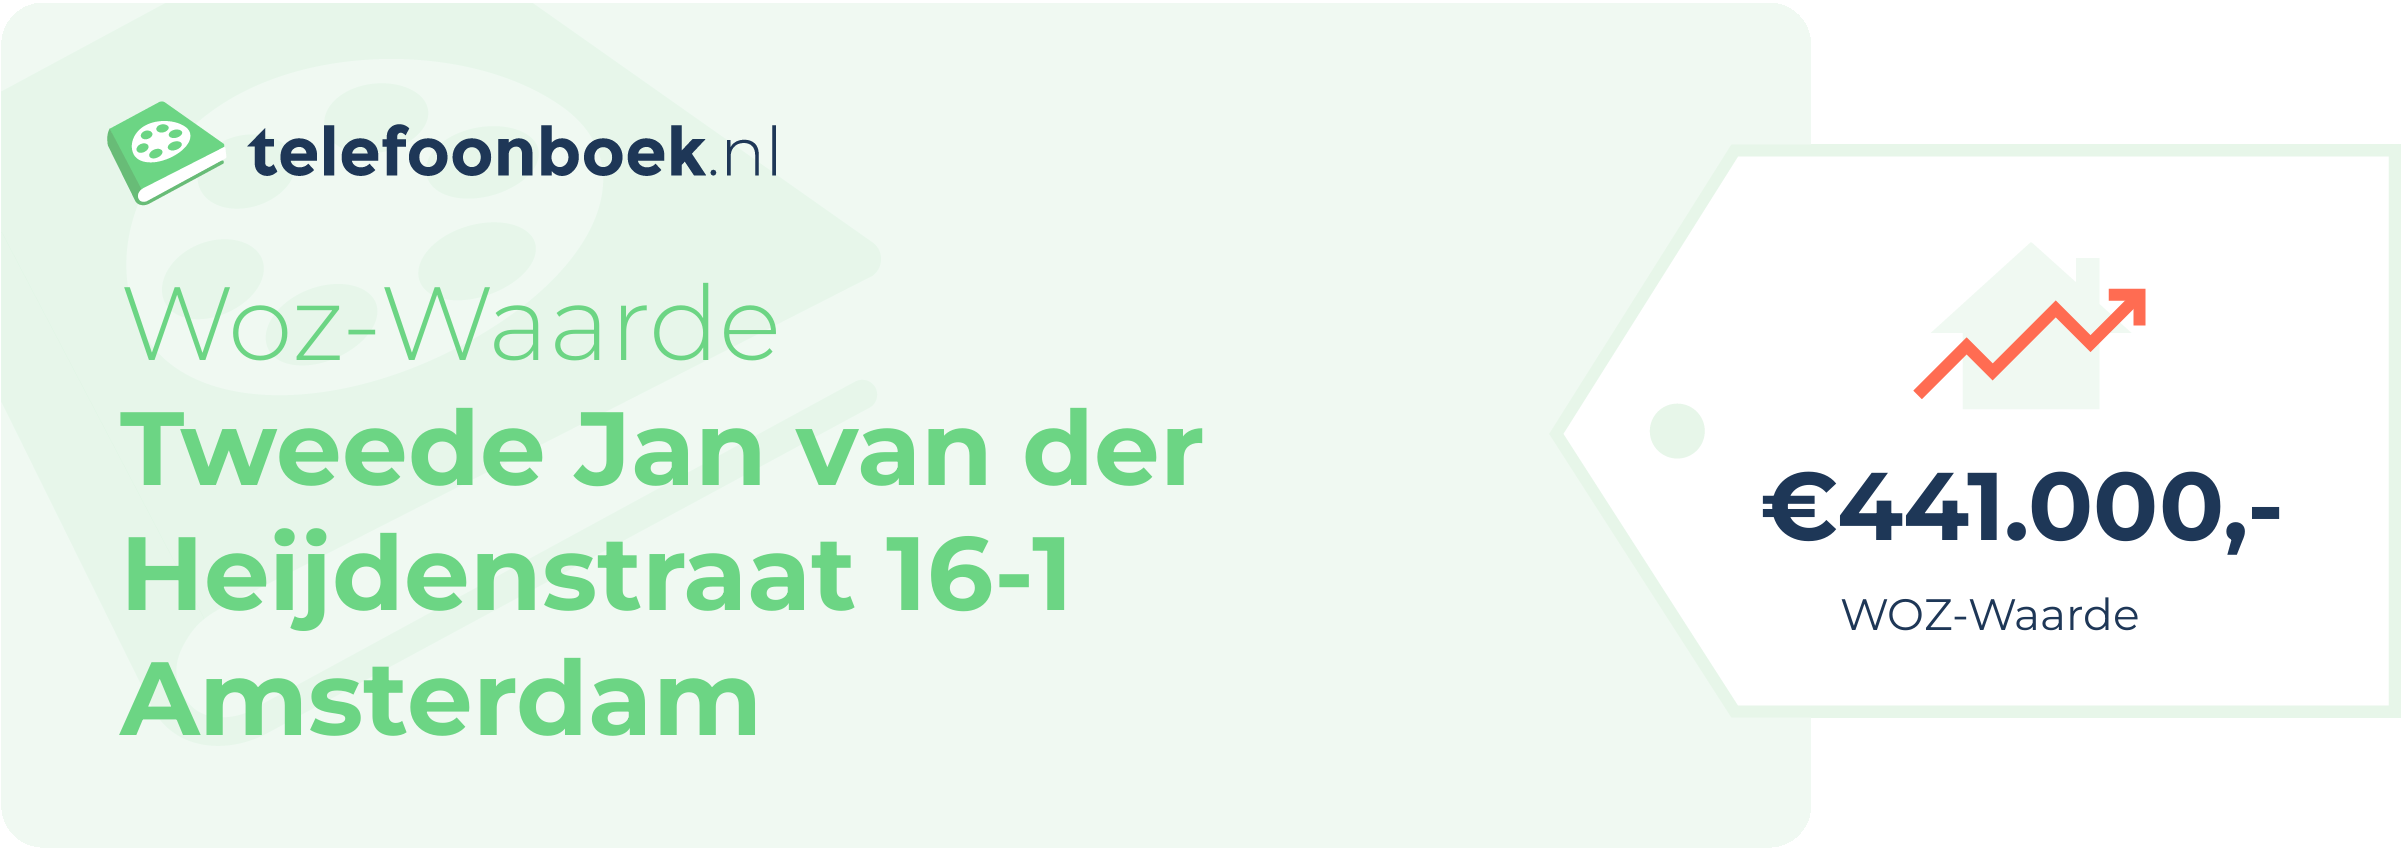 WOZ-waarde Tweede Jan Van Der Heijdenstraat 16-1 Amsterdam